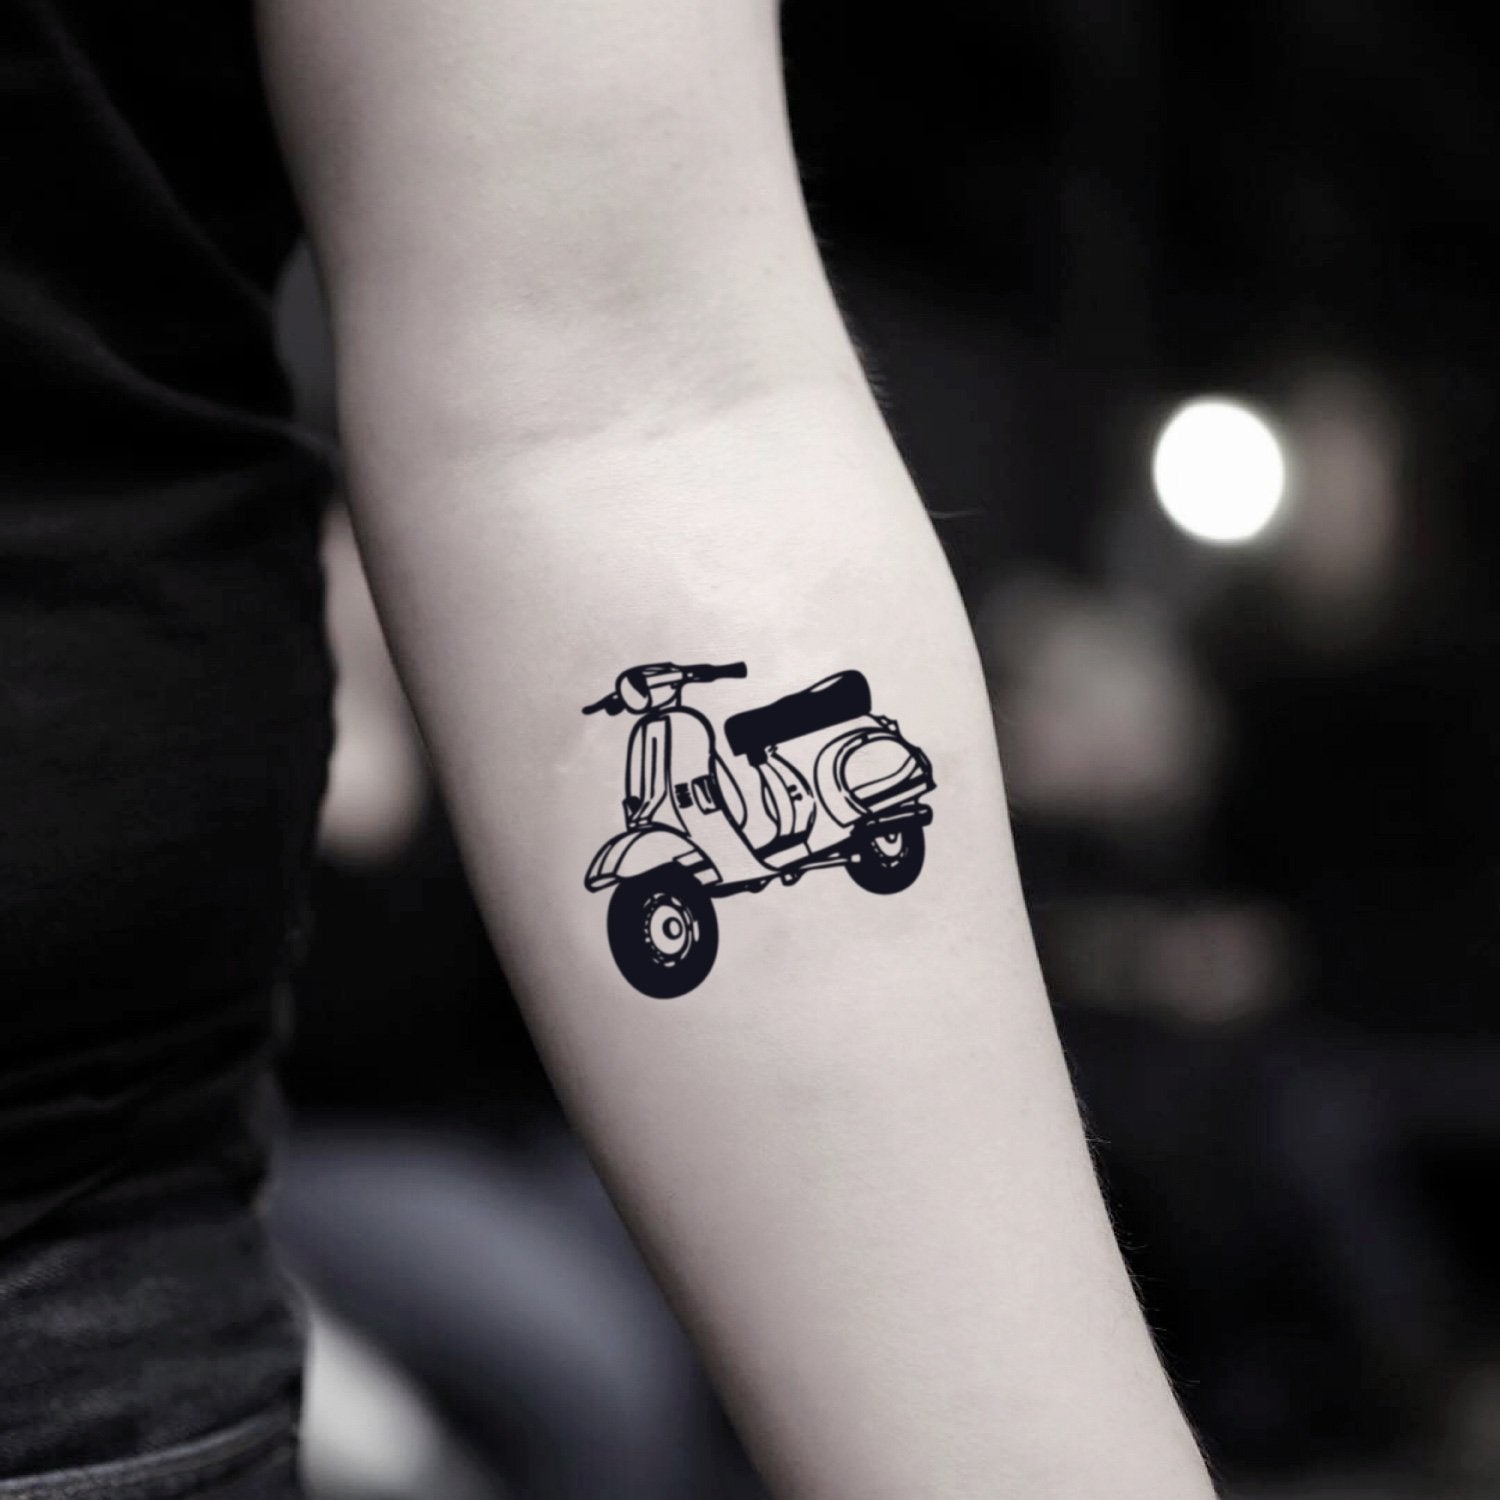 fake small scooter illustrative temporary tattoo sticker design idea on inner arm